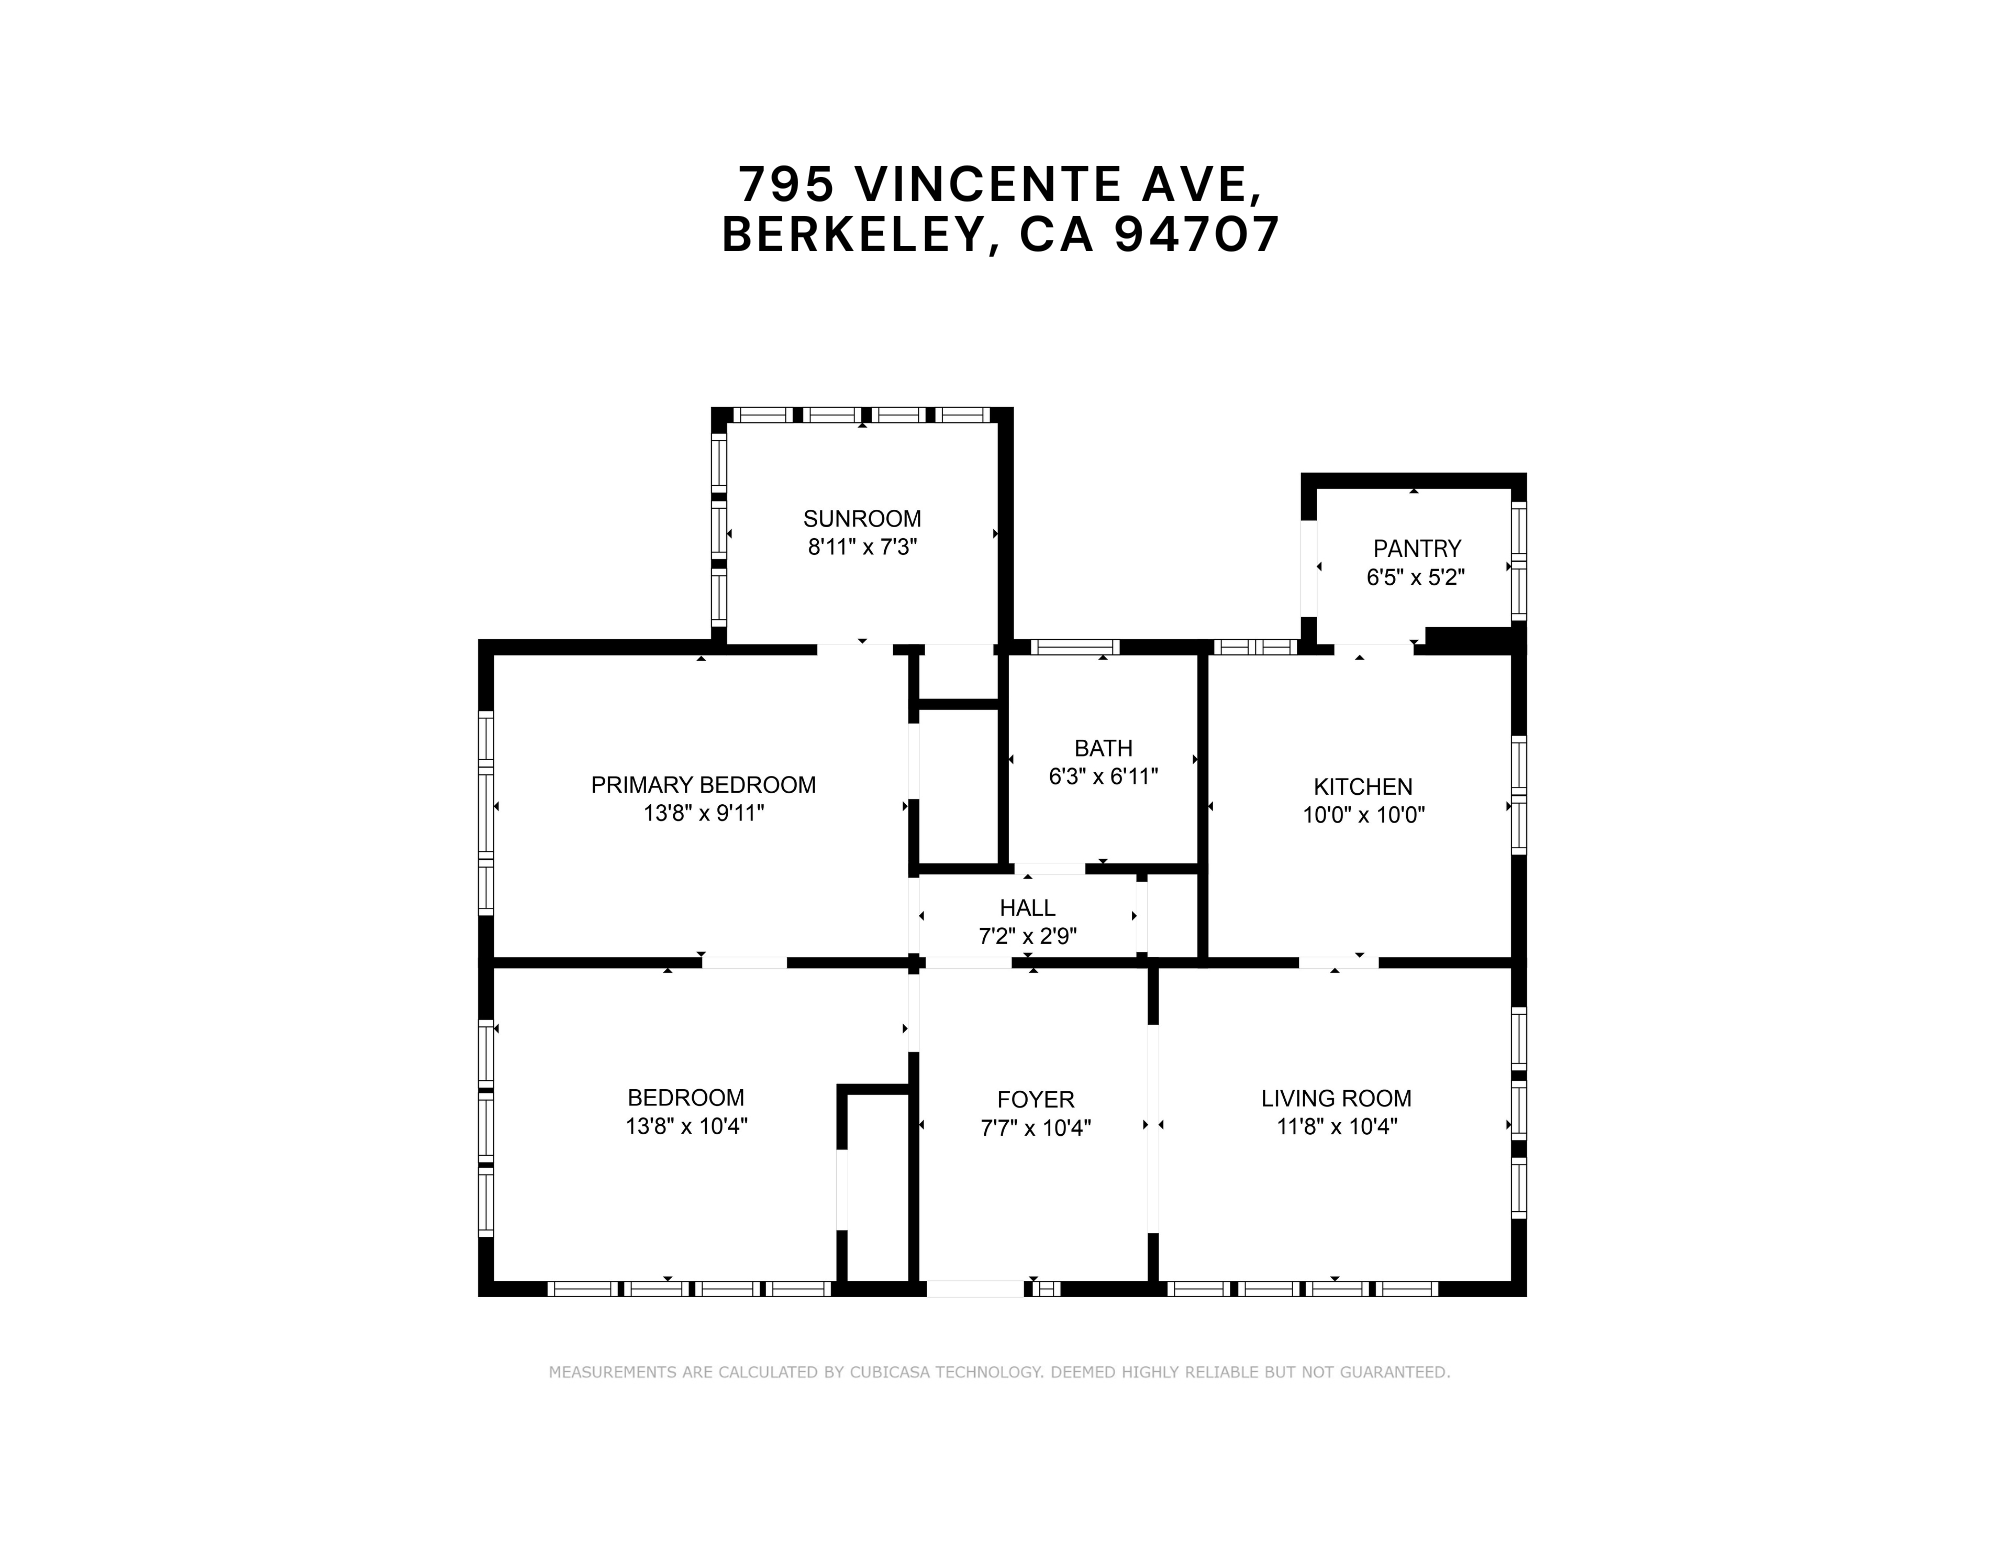 795 Vincente Ave, Berkeley, CA 94707